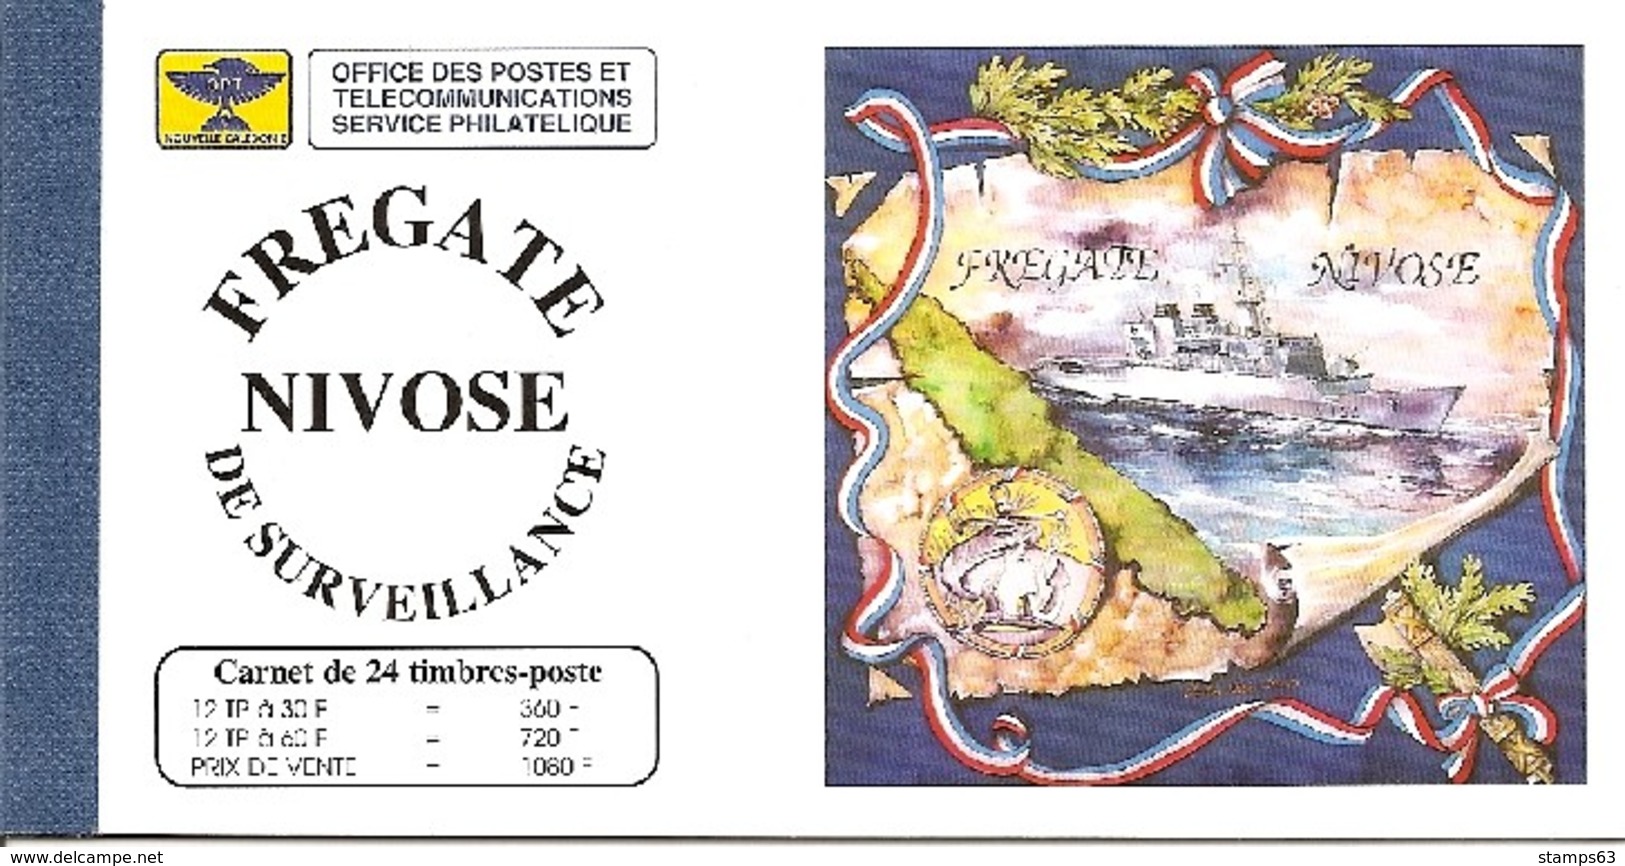 NEW CALEDONIA / NOUV CALEDONIE, 1994, Booklet / Carnet 8 , Fregate Nivose (ship), Prestige Booklet - Markenheftchen